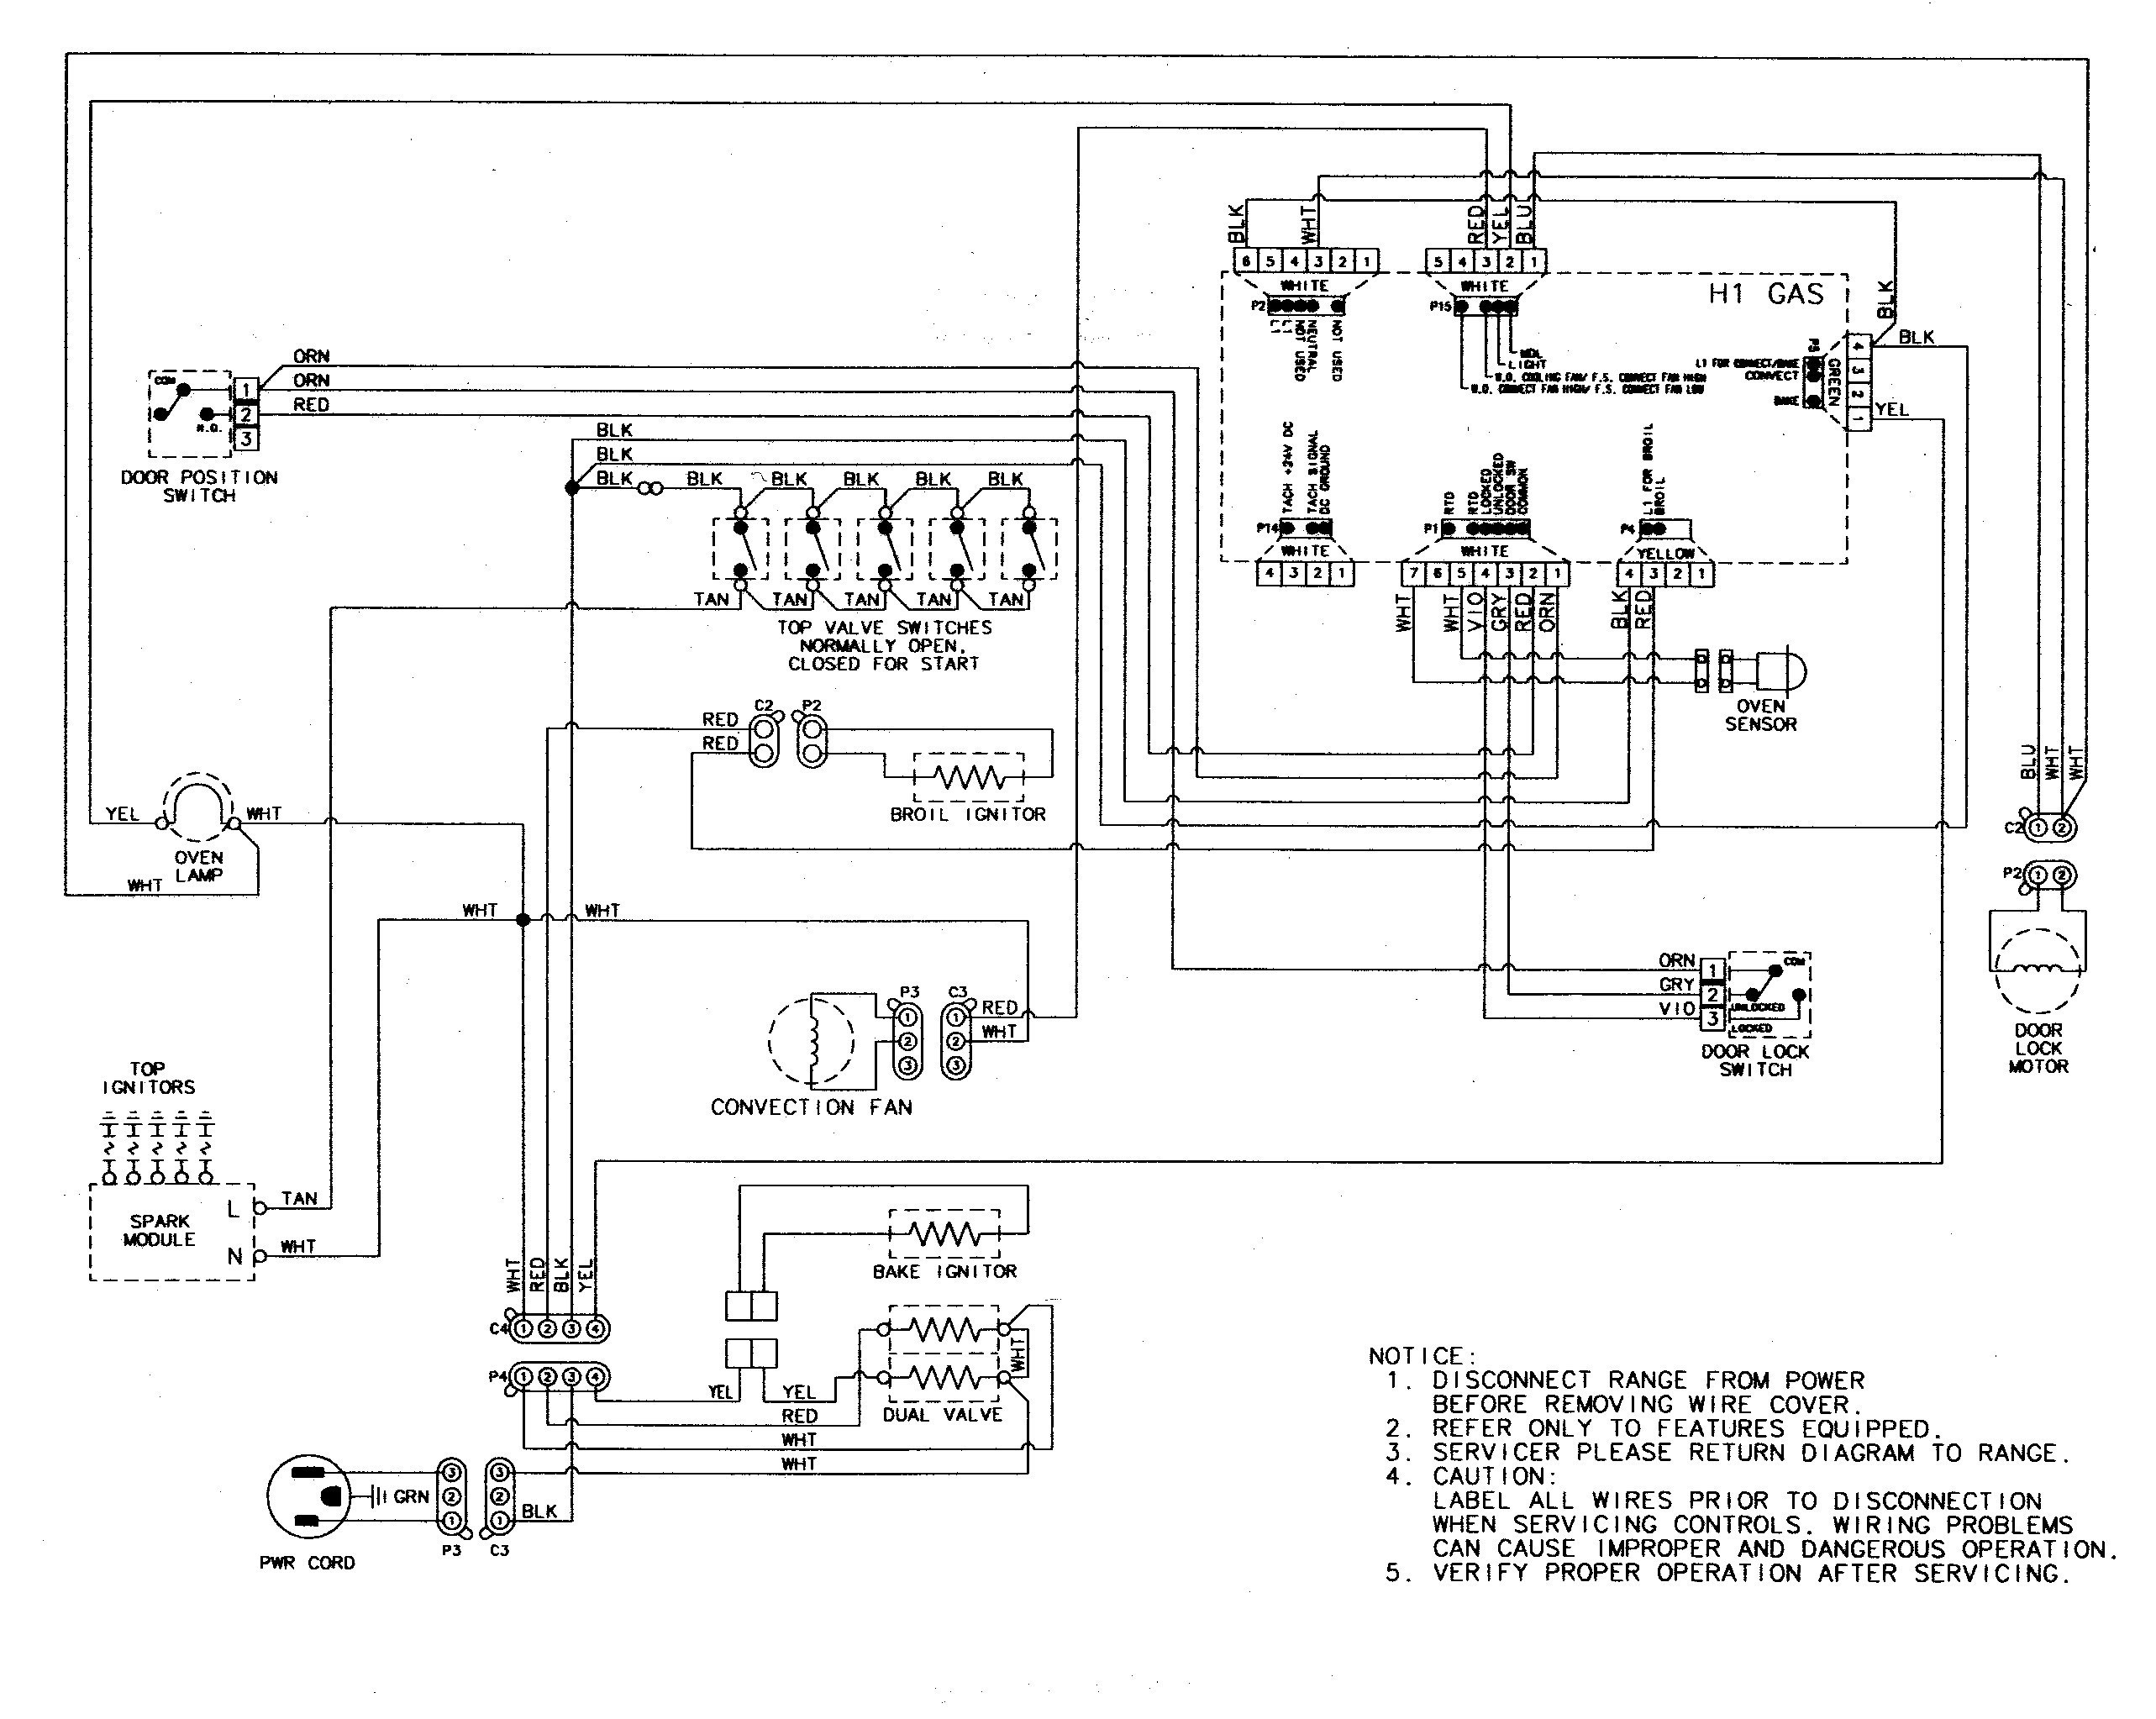 Maytag centennial dryer wiring diagram user manual pdf